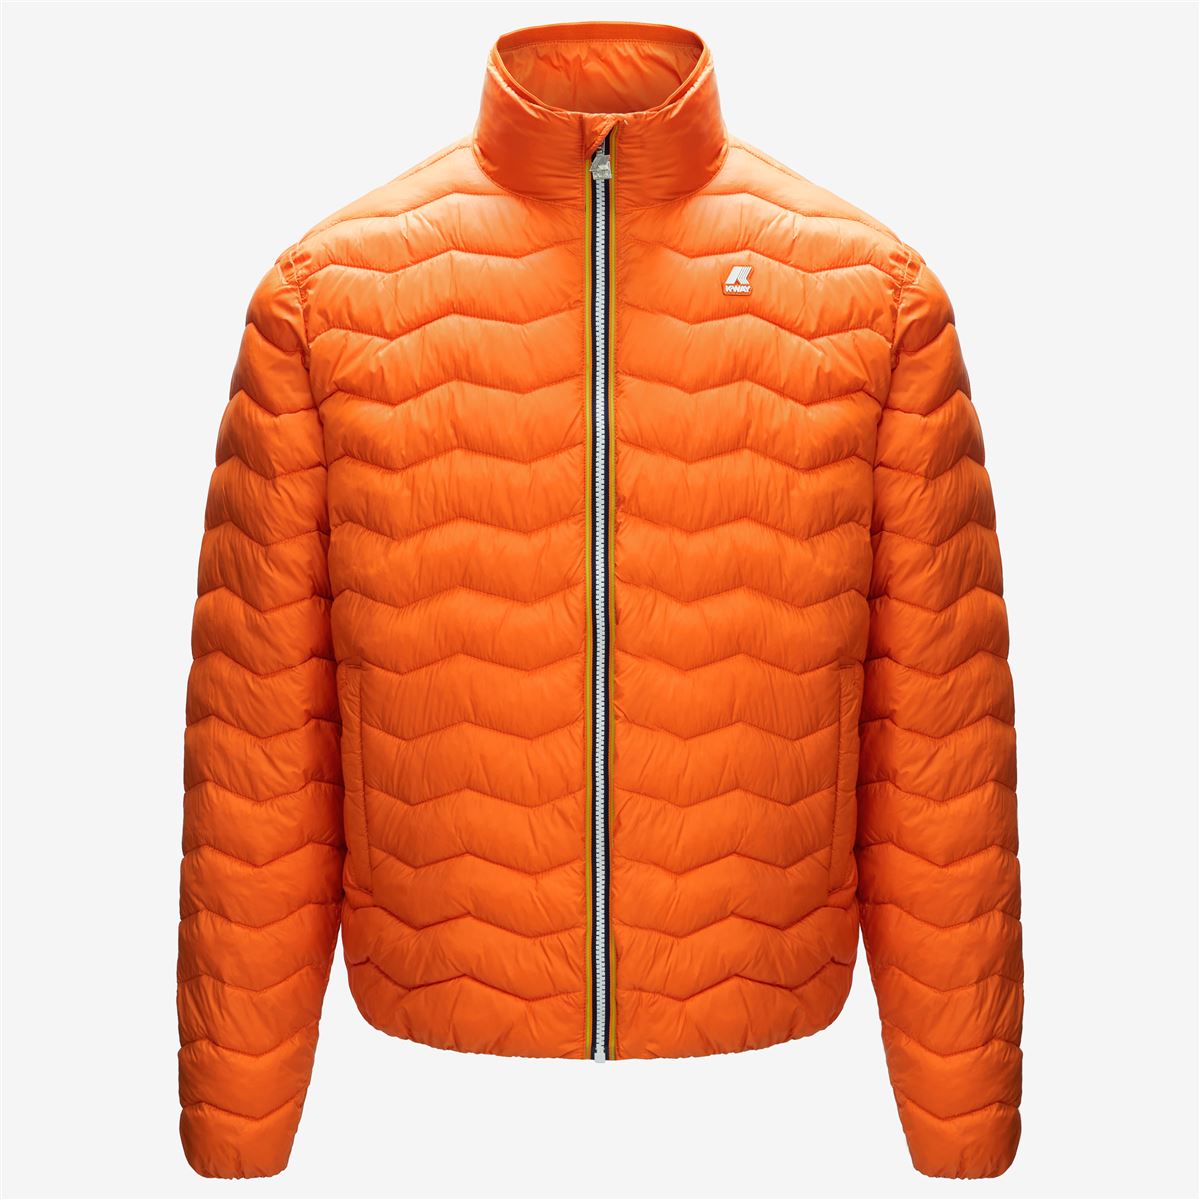 VALENTINE ECO WARM - Jackets - Short - Man - Orange